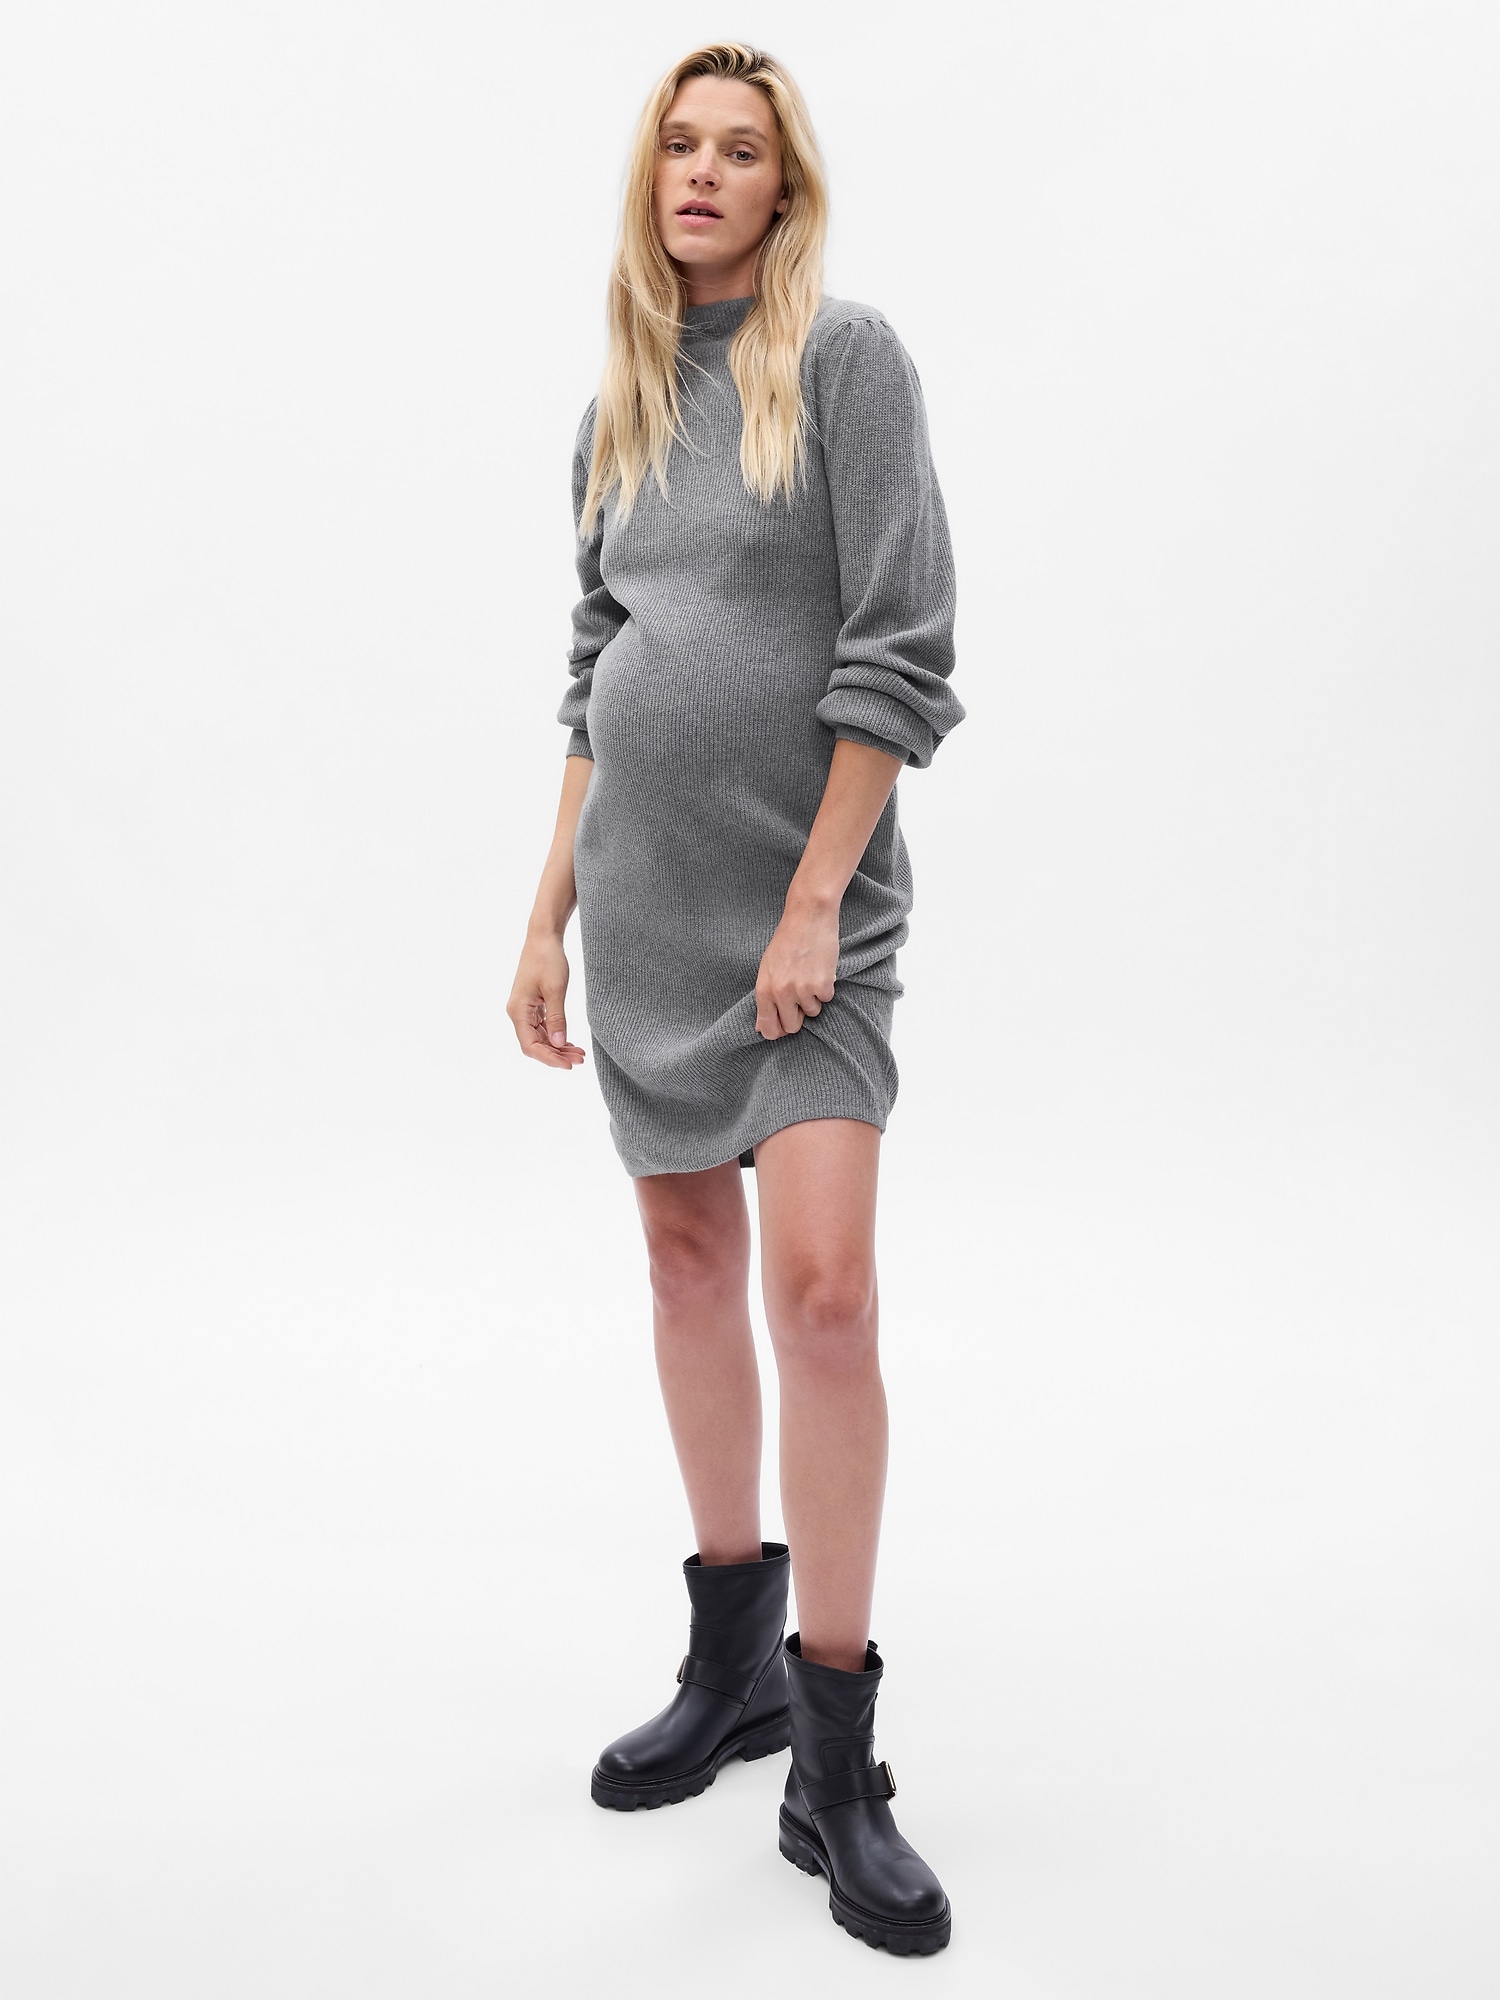  GOSIKH Sweater Dress for Women - Turtleneck Drop Shoulder Sweater  Dress (Color : Black, Size : Medium) : Clothing, Shoes & Jewelry